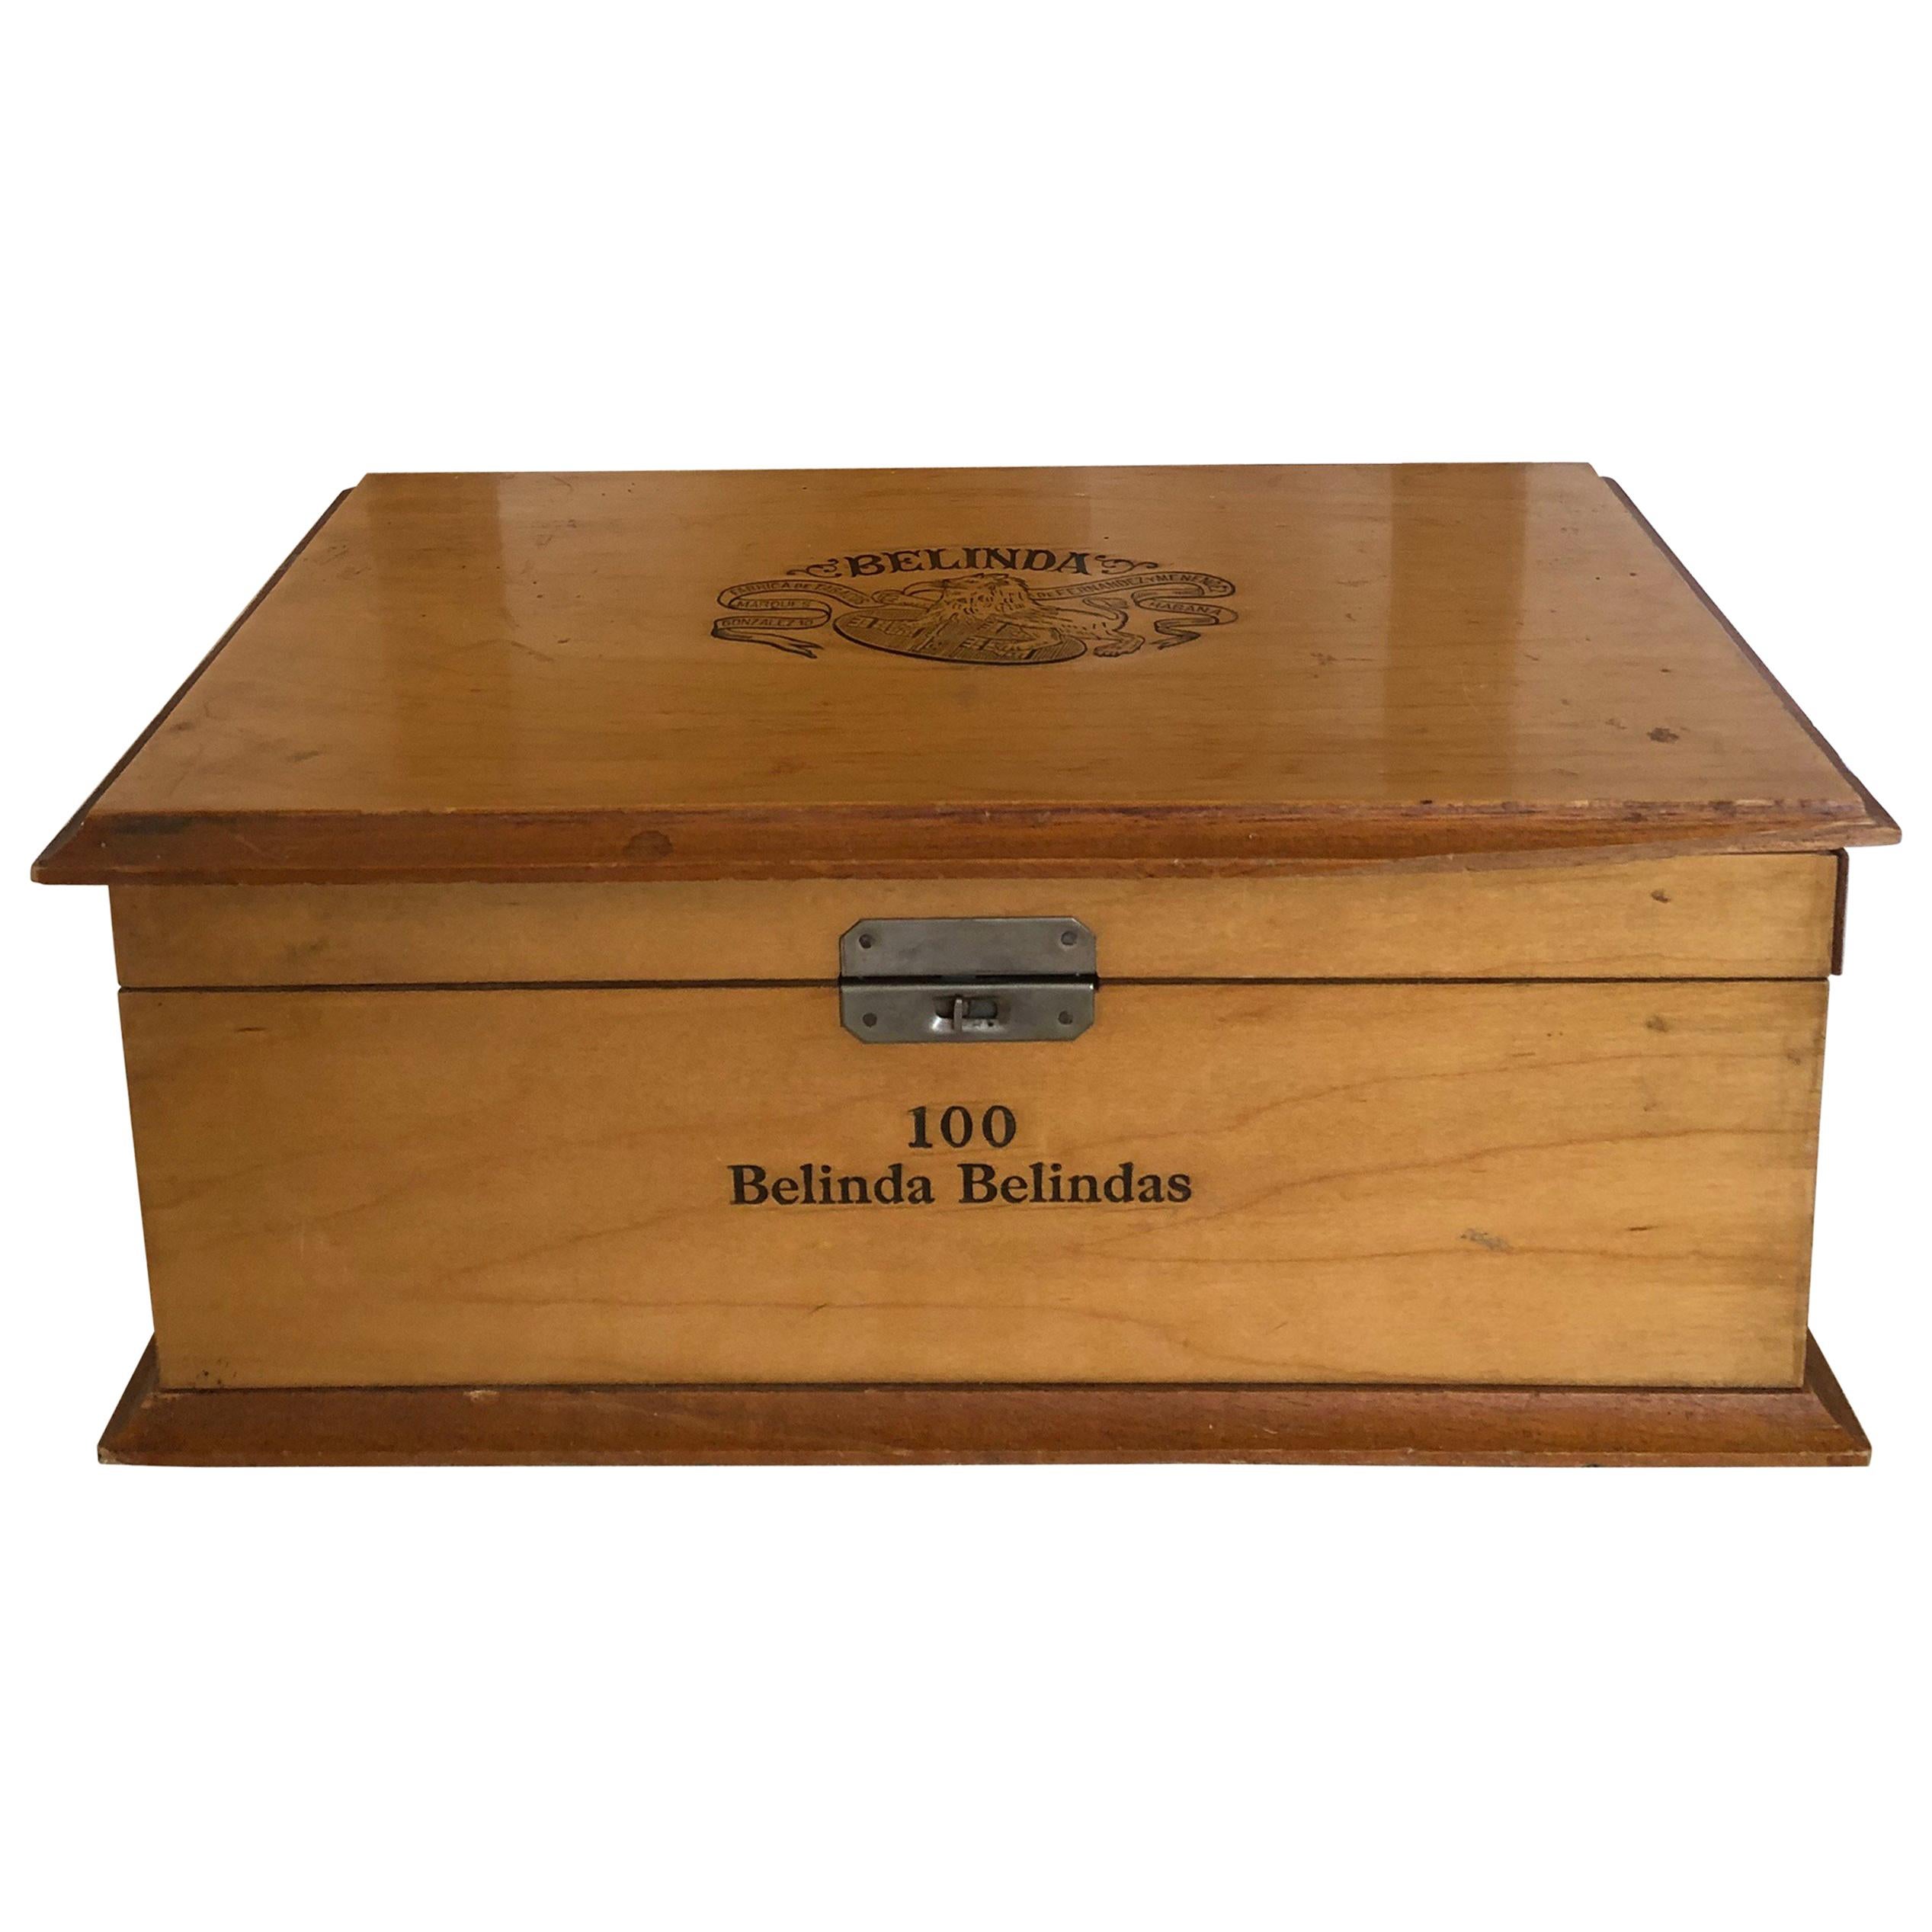 Belinda 100 Wooden Authentic Box, British American Tobacco, 1980s